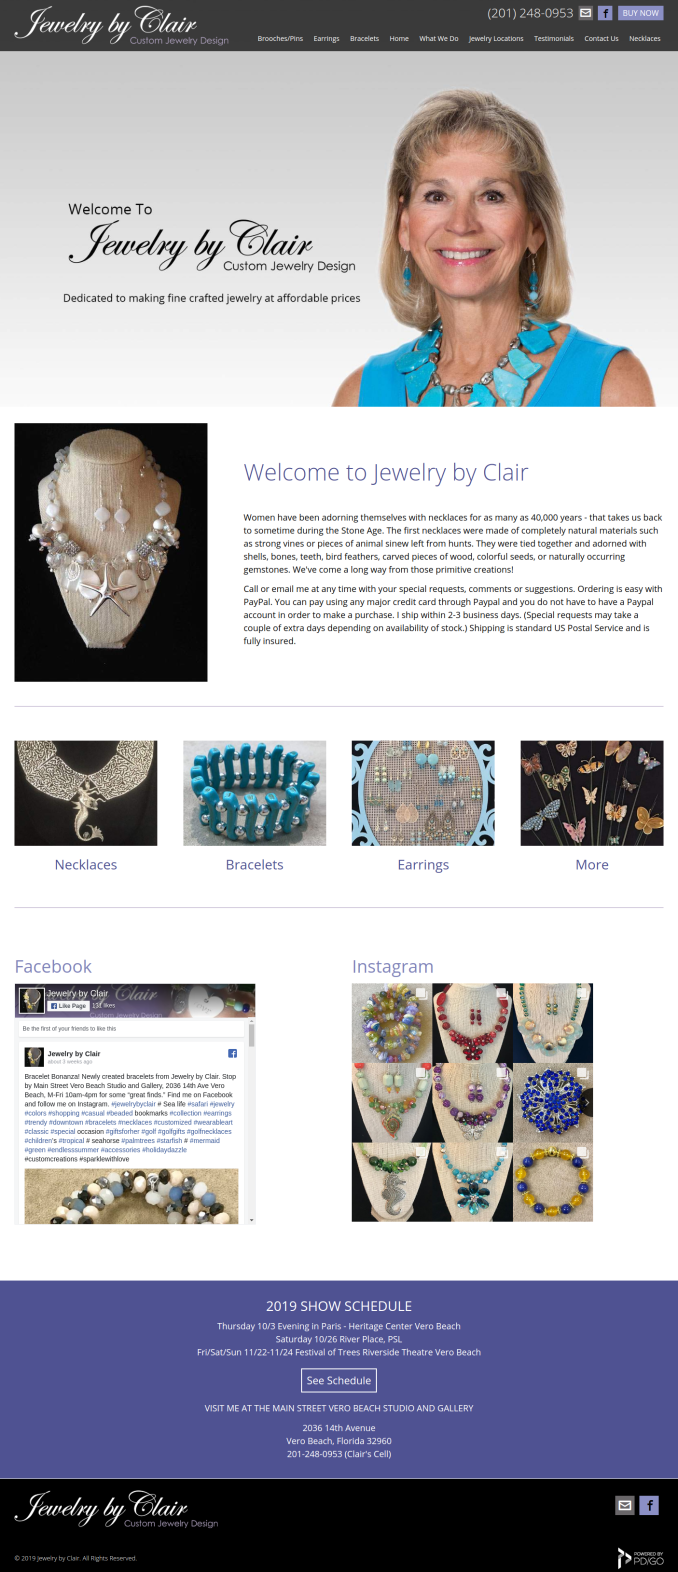 Jewelry by Clair. Opens new window.